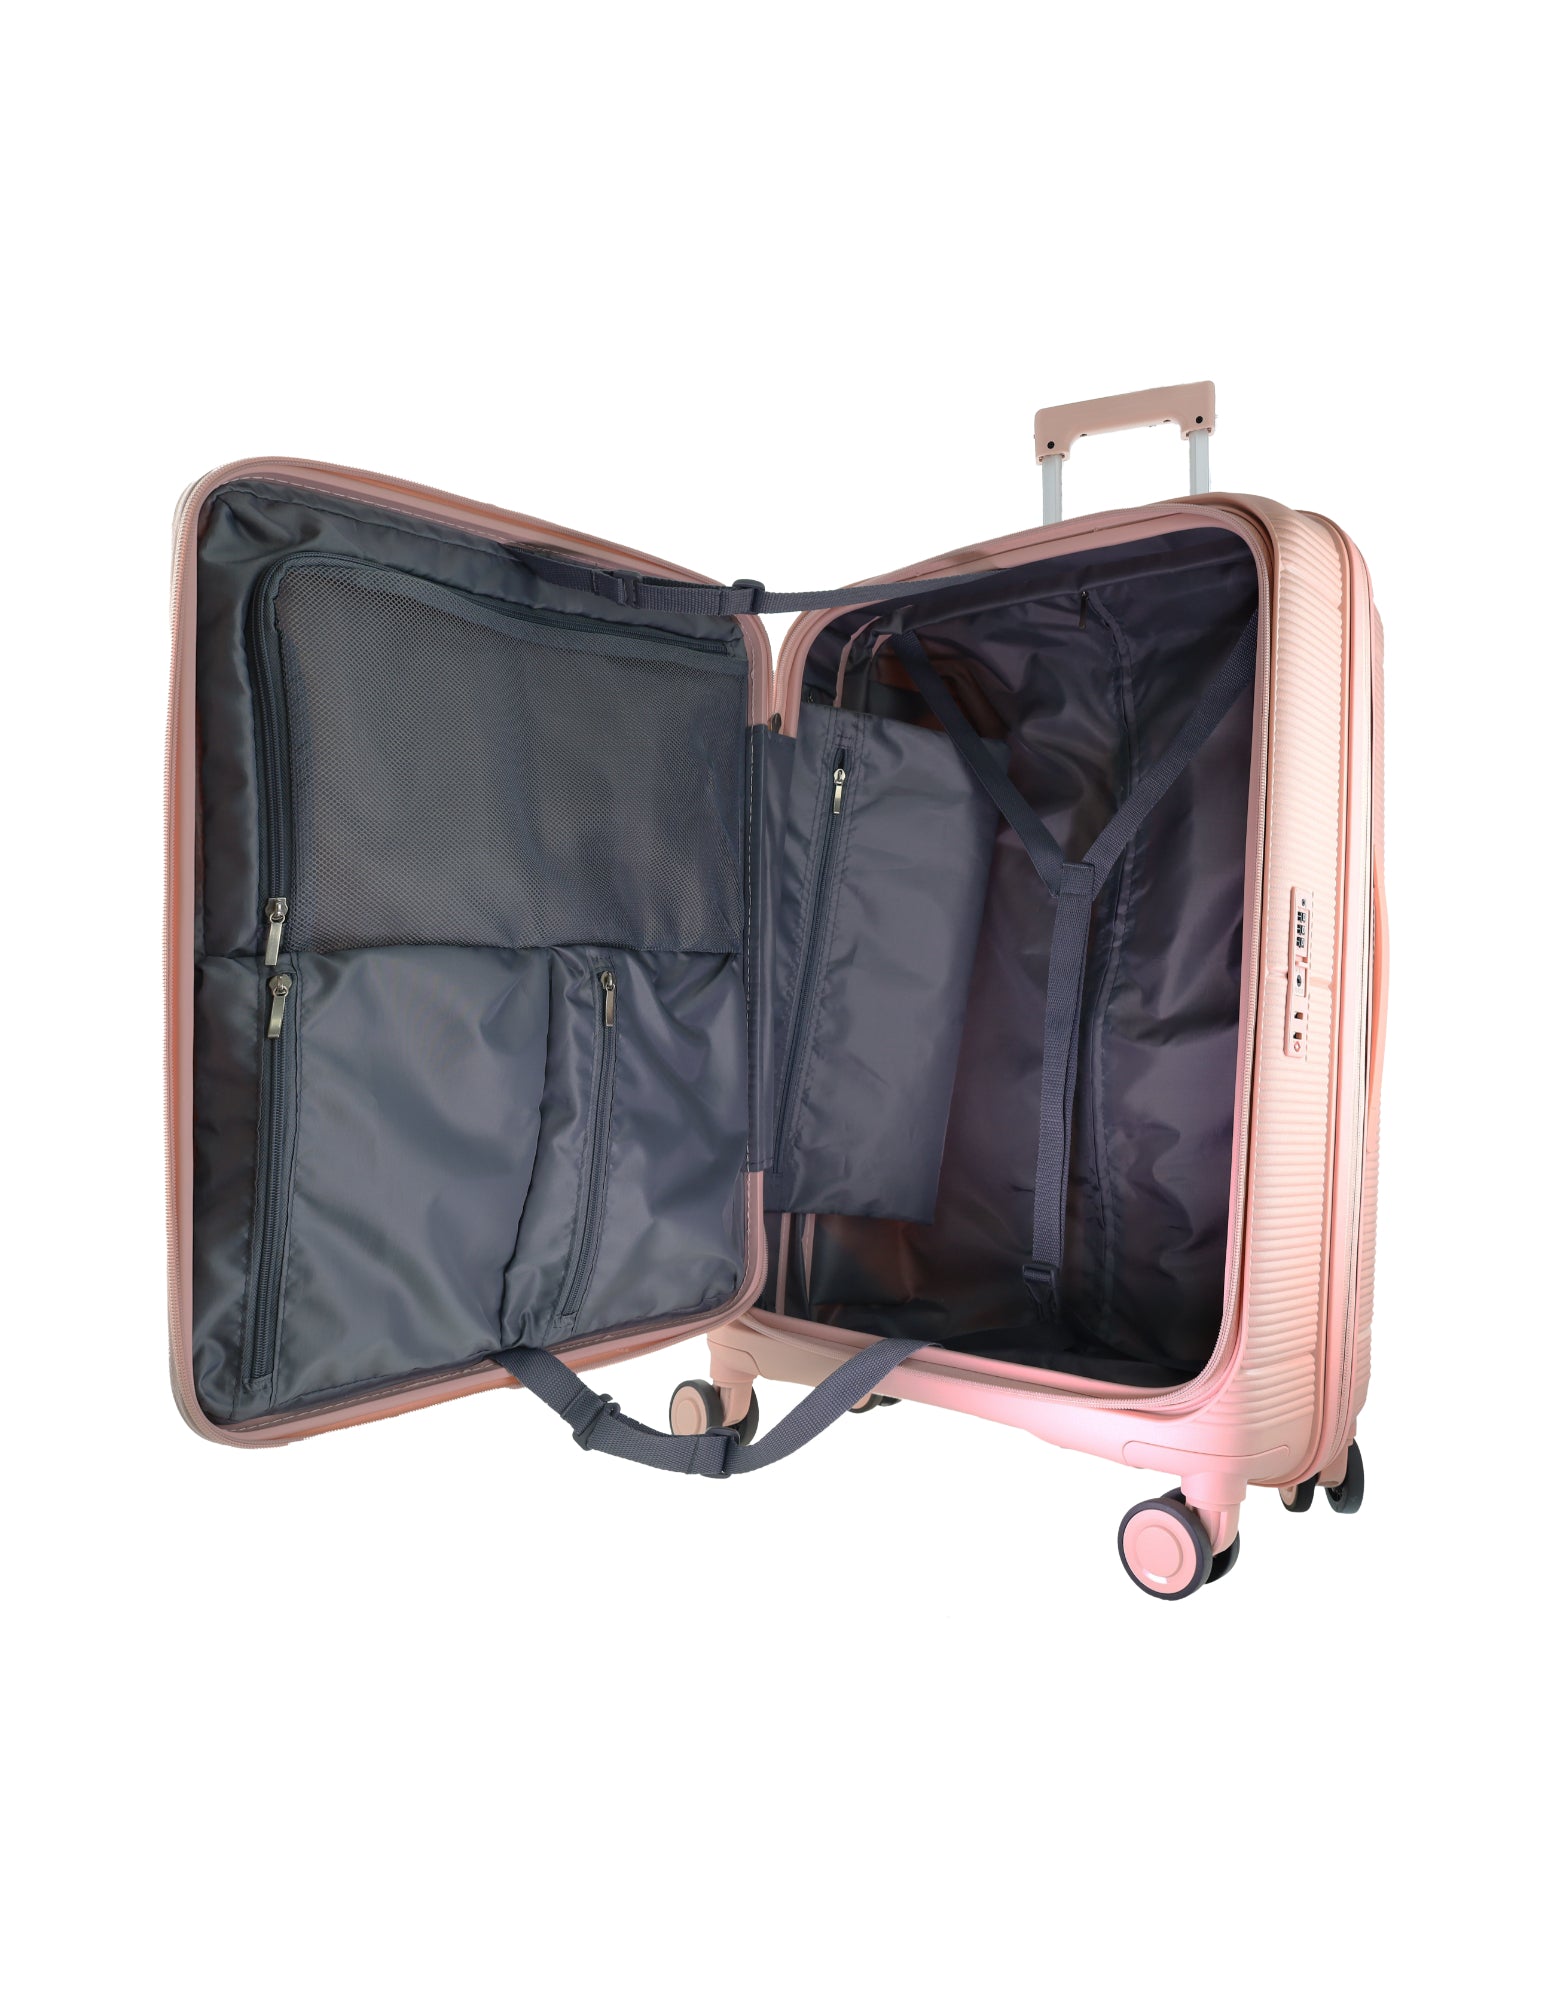 Pierre Cardin 69cm MEDIUM Hard Shell Suitcase in Blush